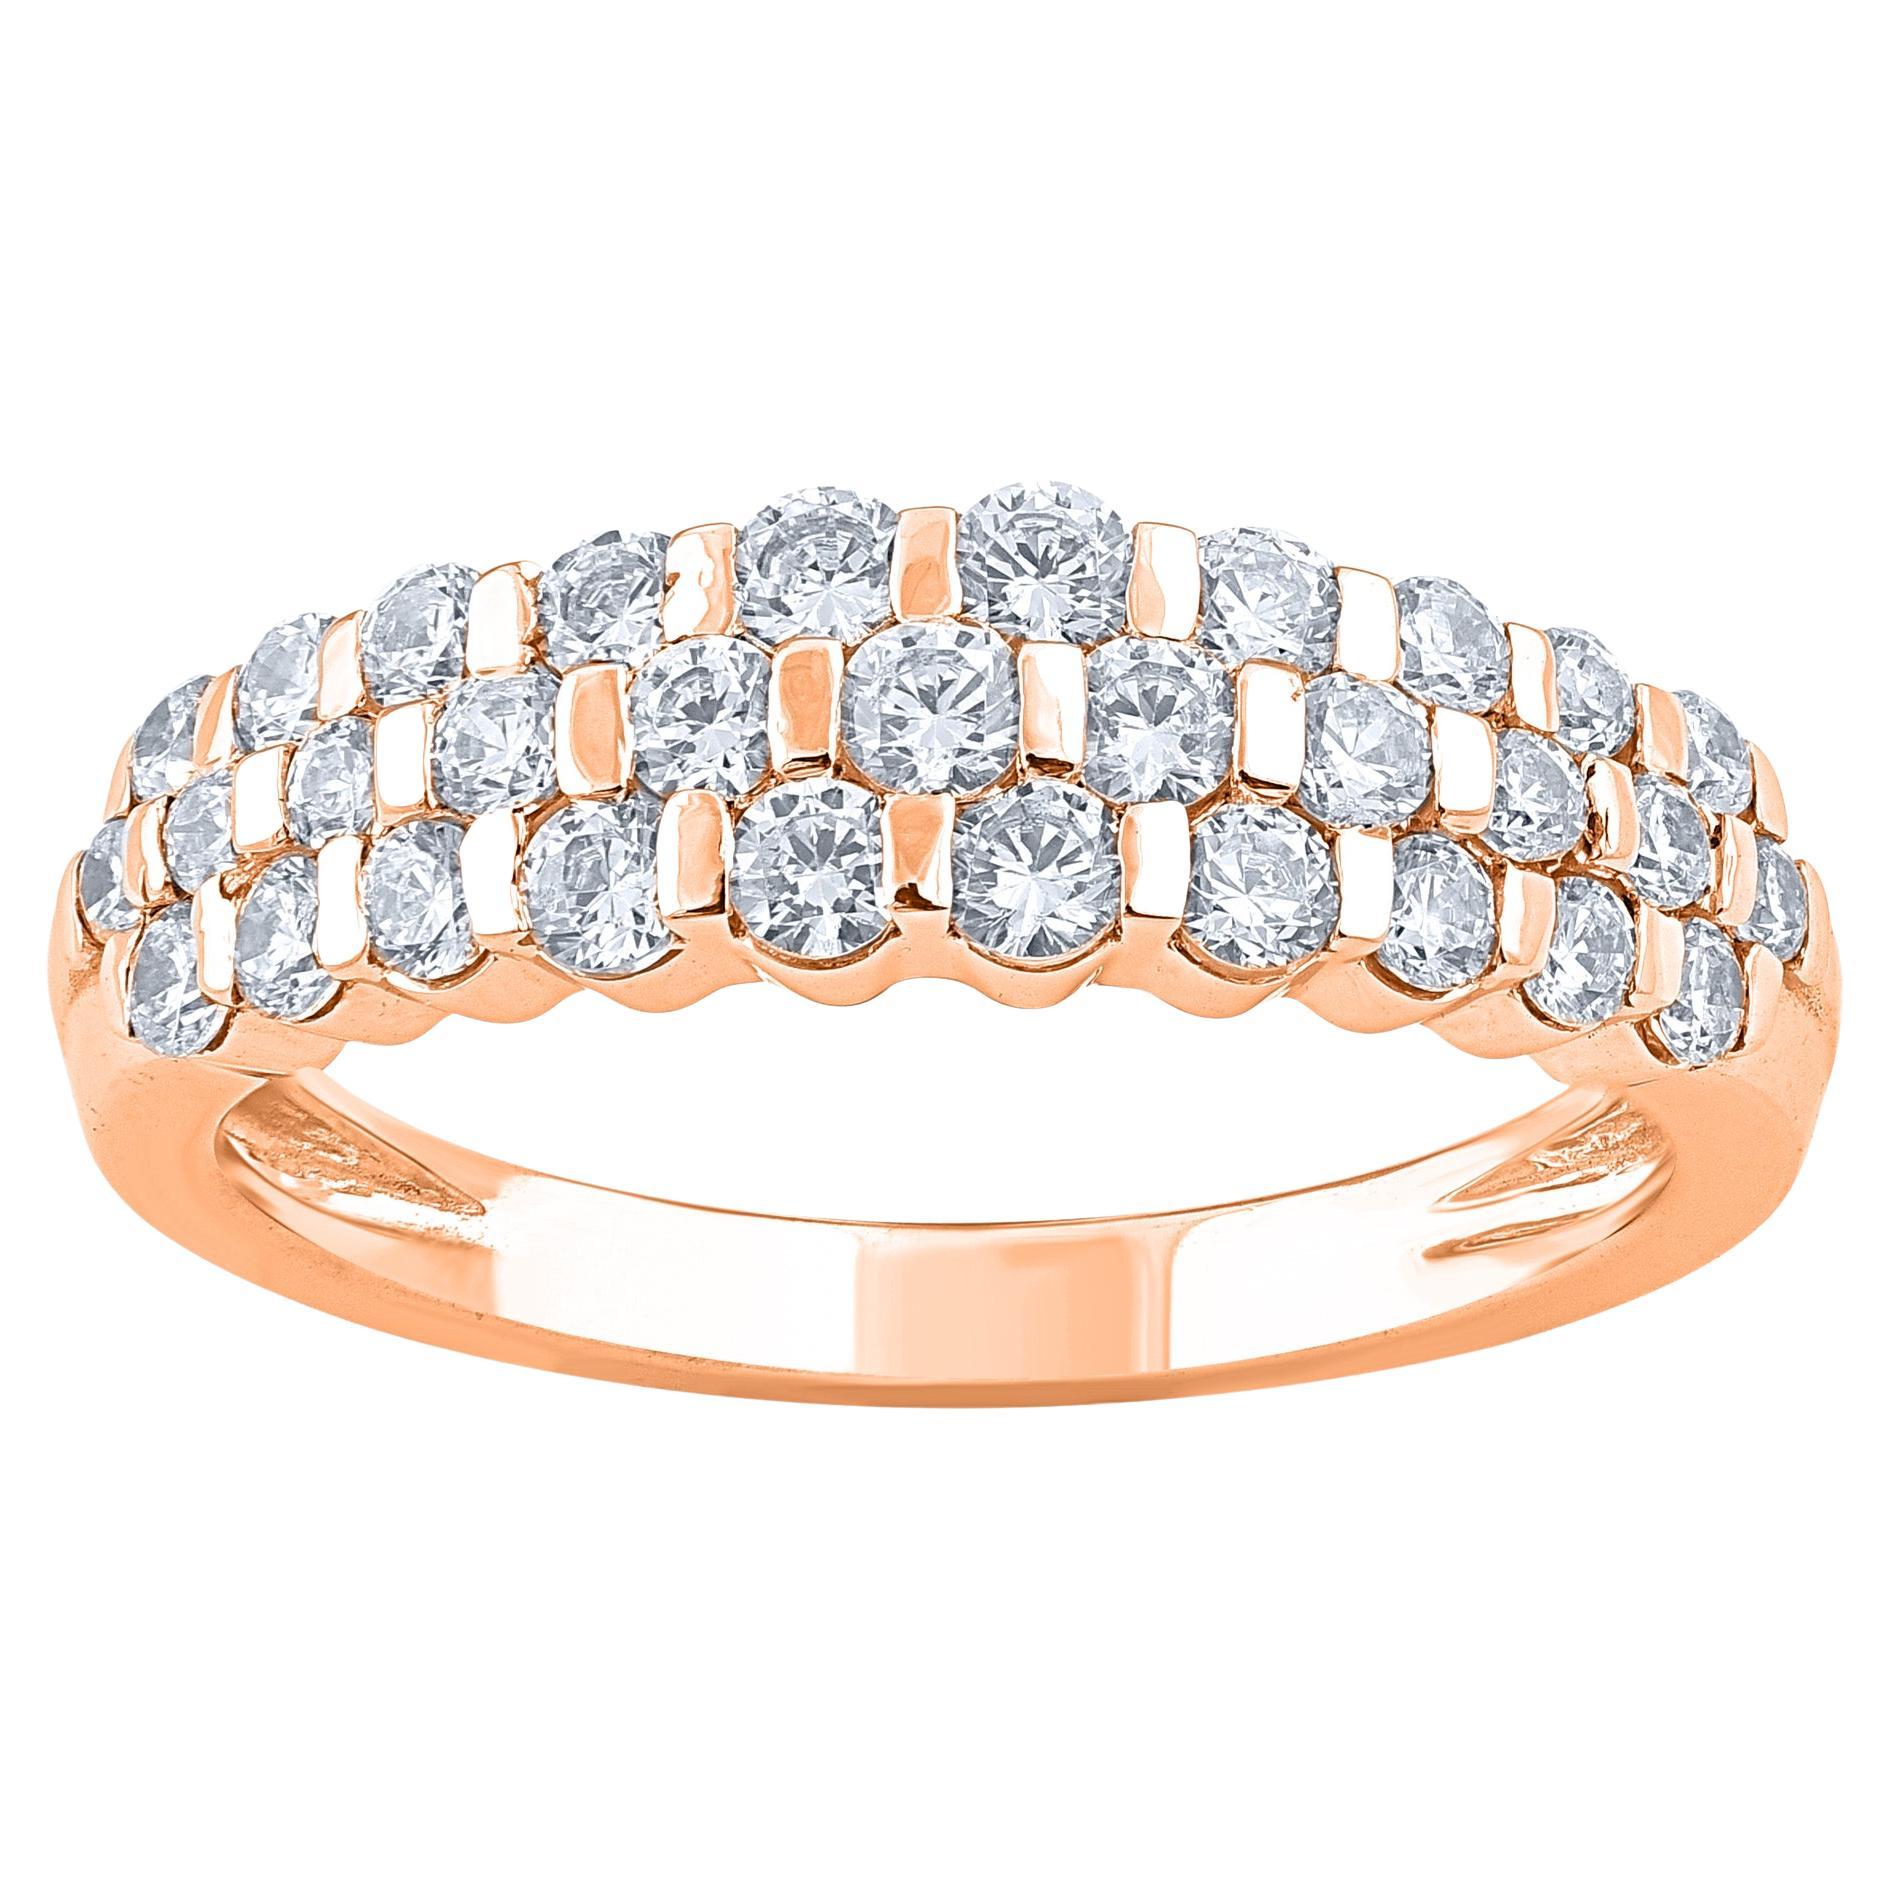 TJD 1.0 Carat Brilliant Cut Diamond 14KT Rose Gold Three Row Wedding Band Ring For Sale